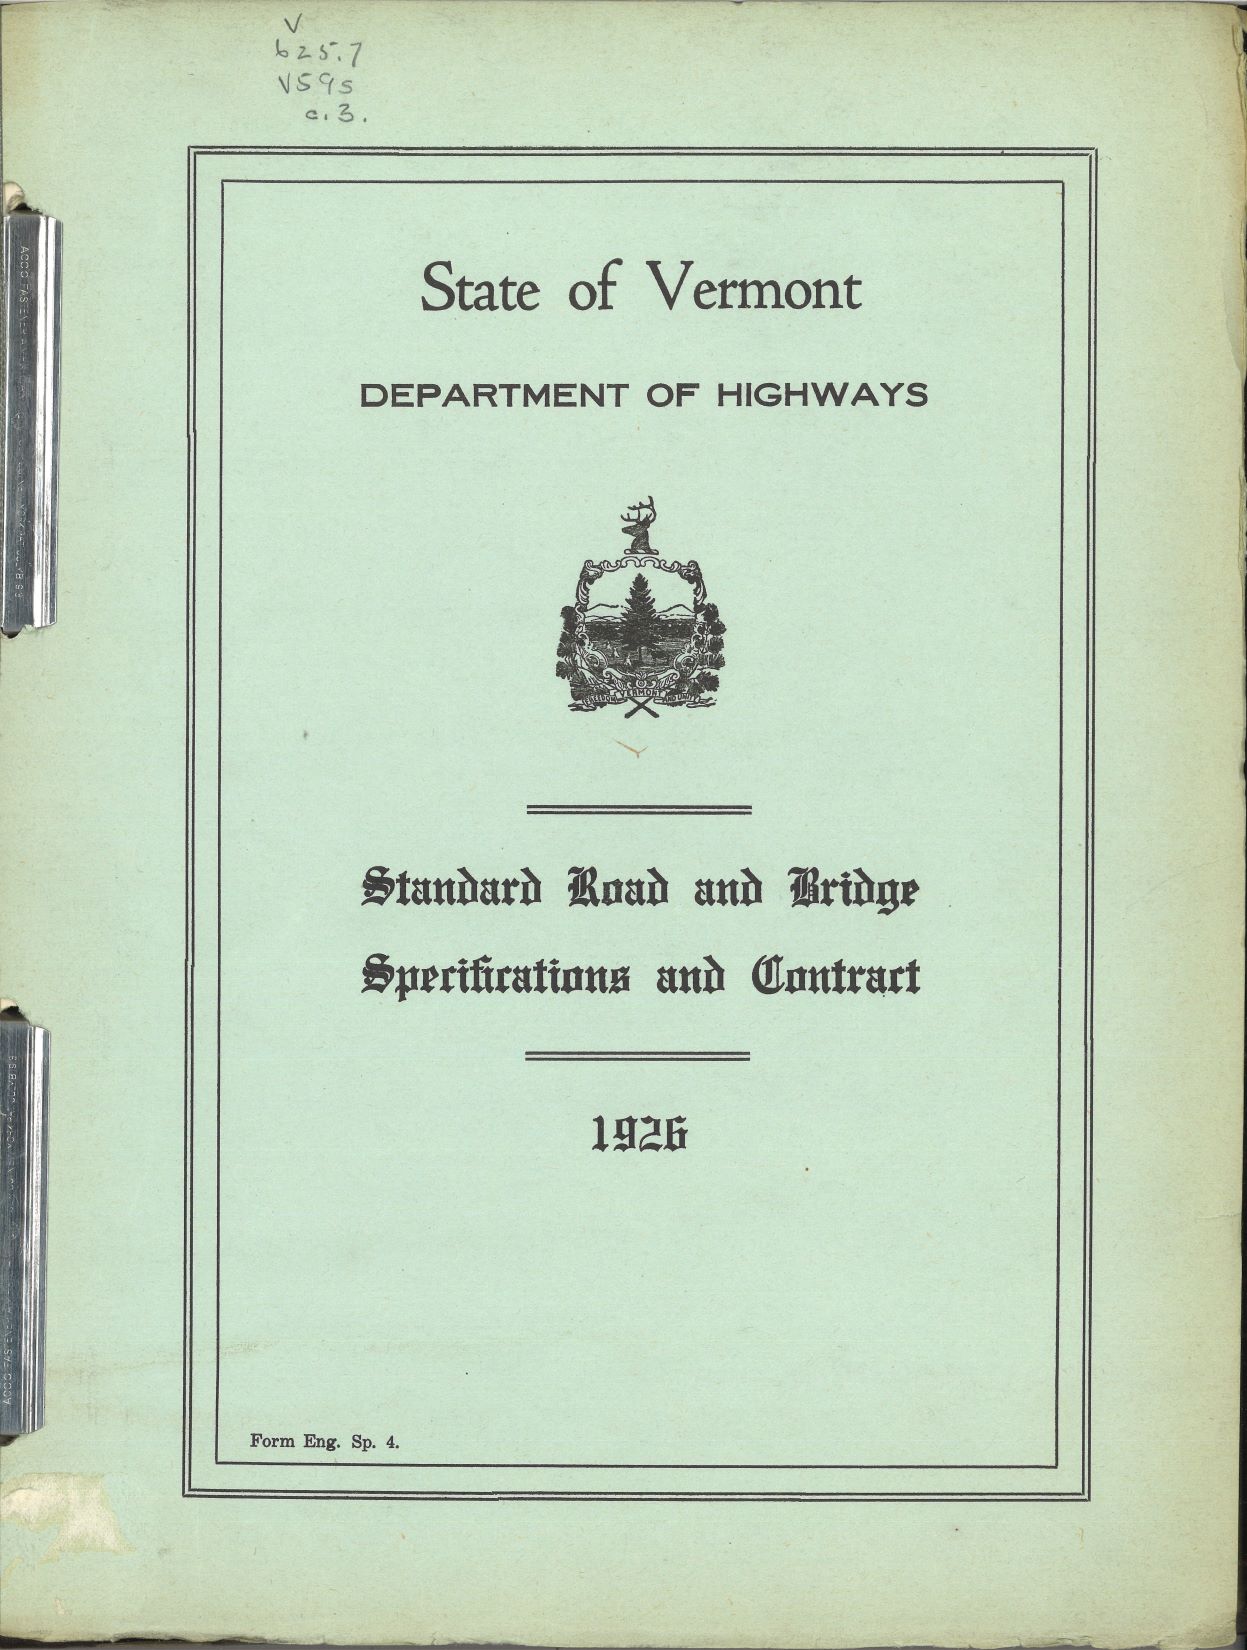 1926 Standard Road and Bridge Spec Book Cover